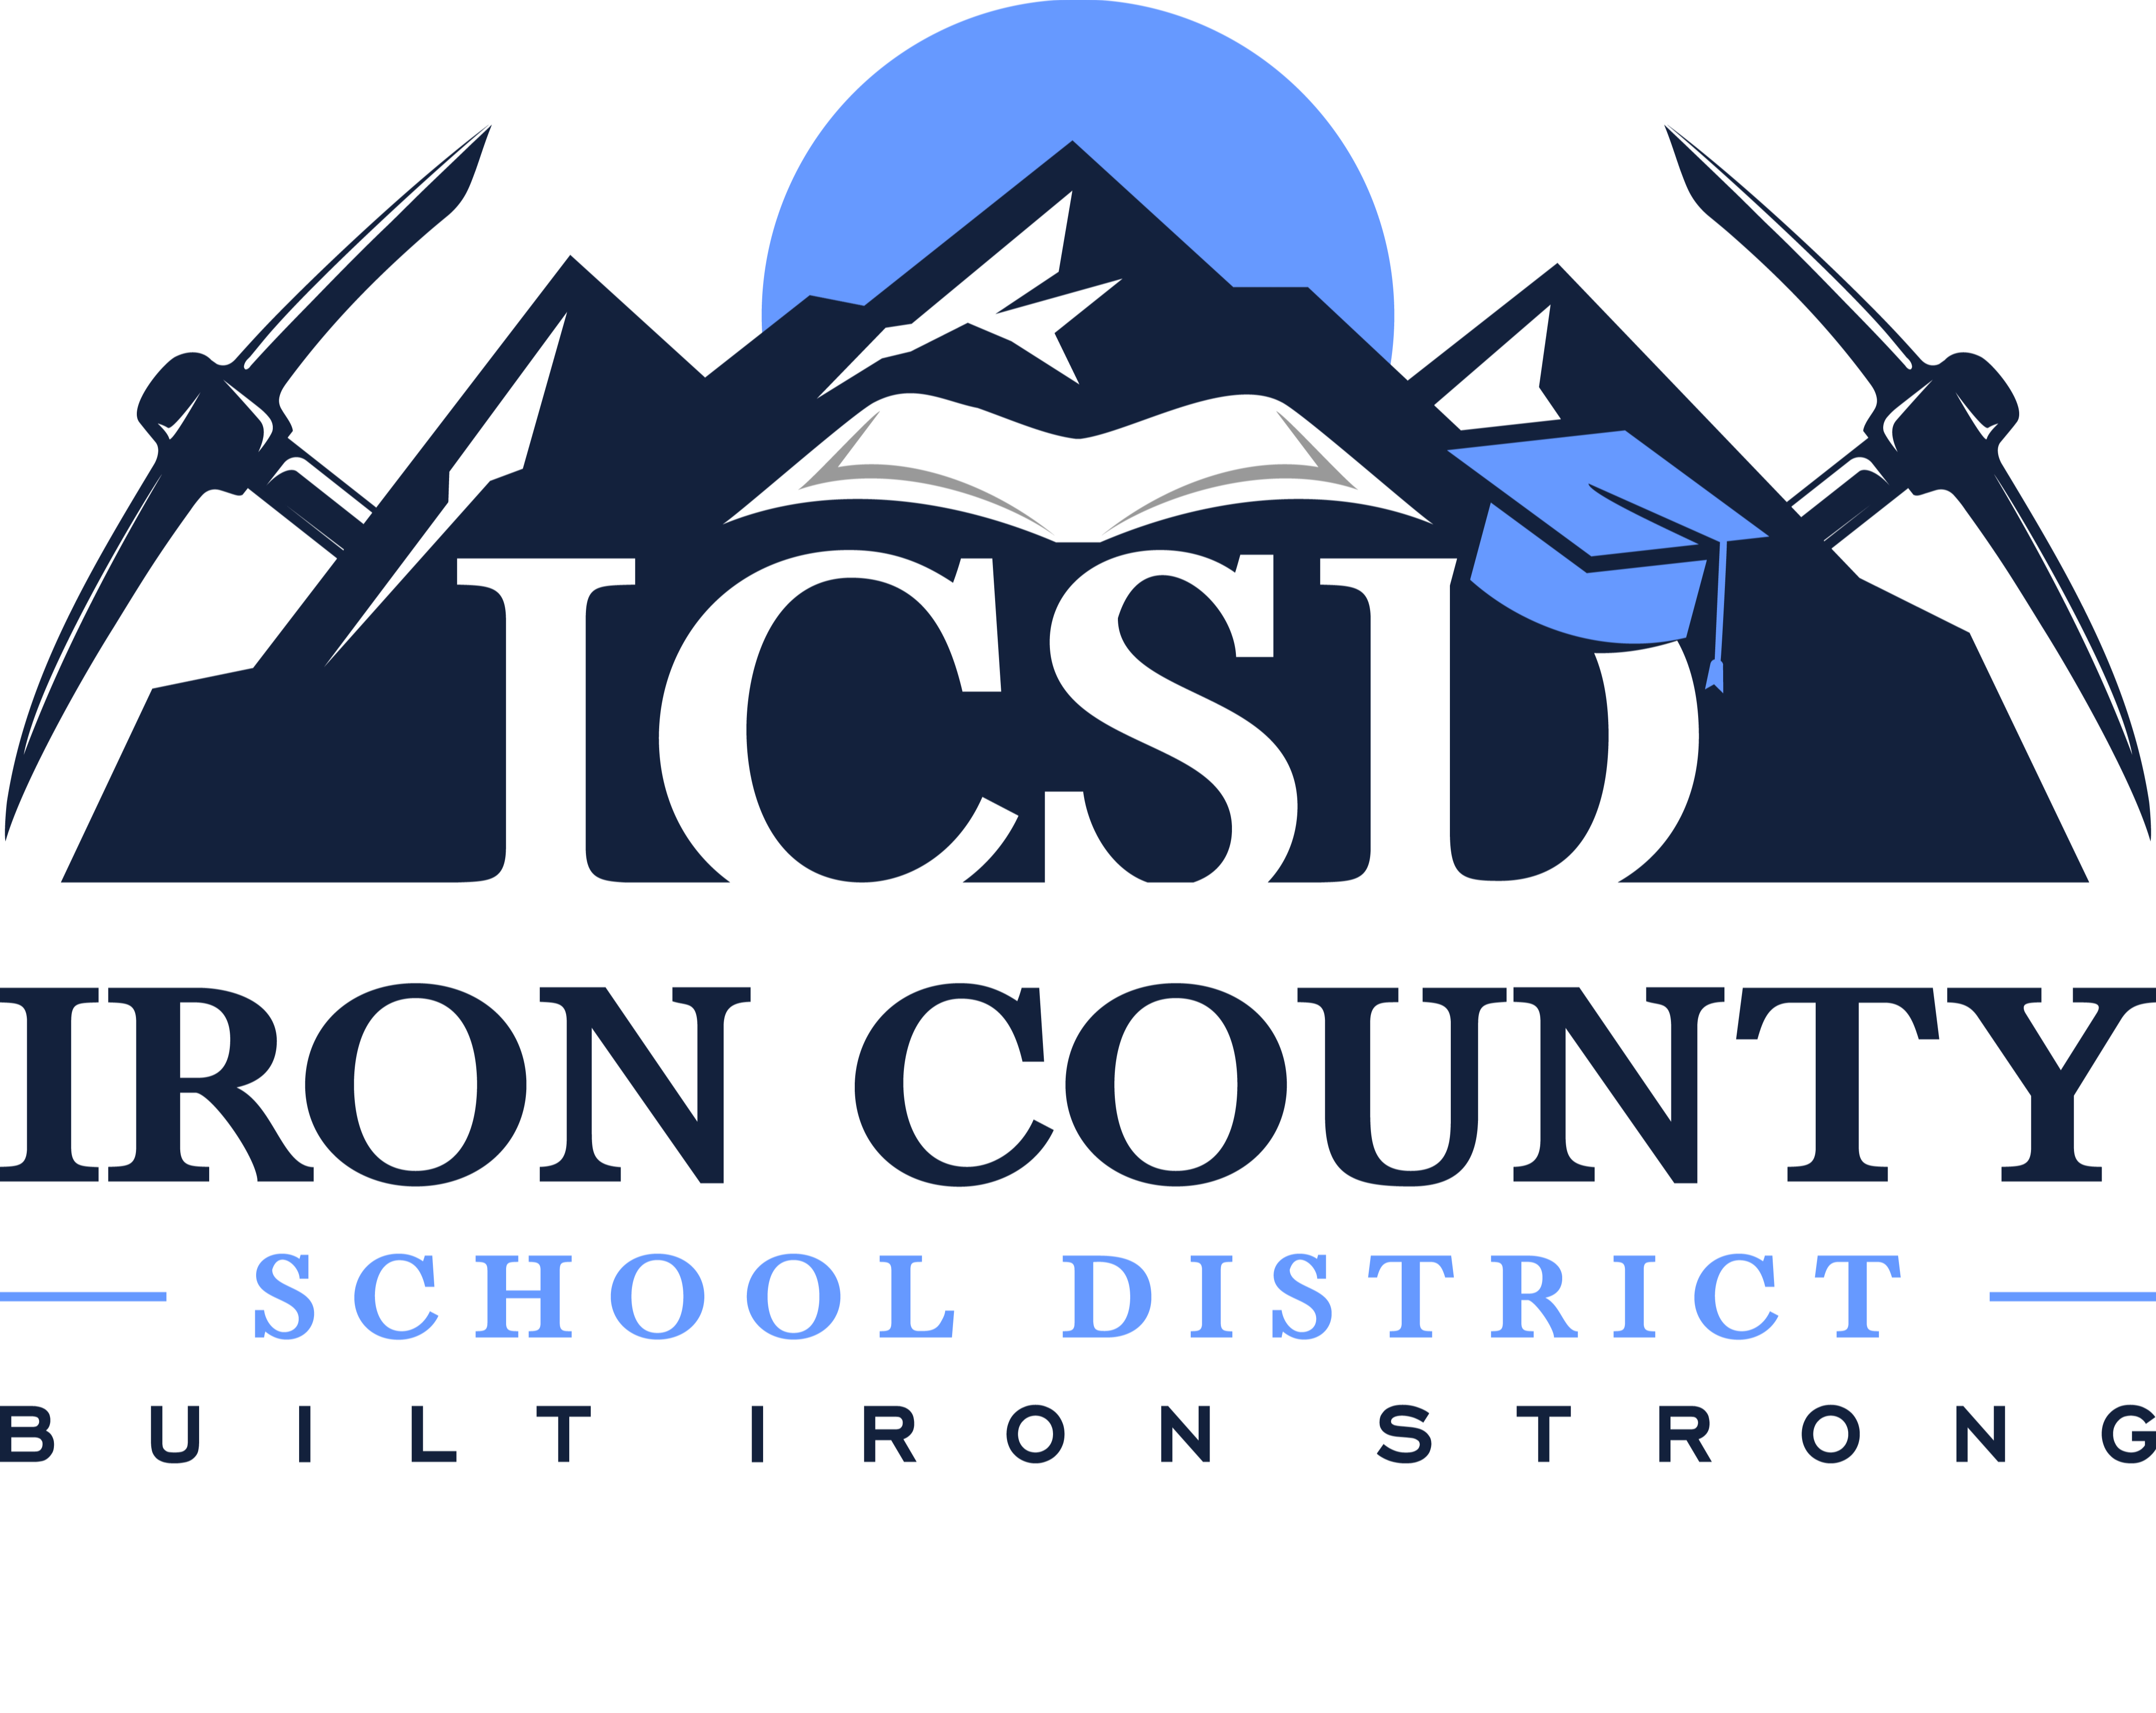 Iron County School District logo